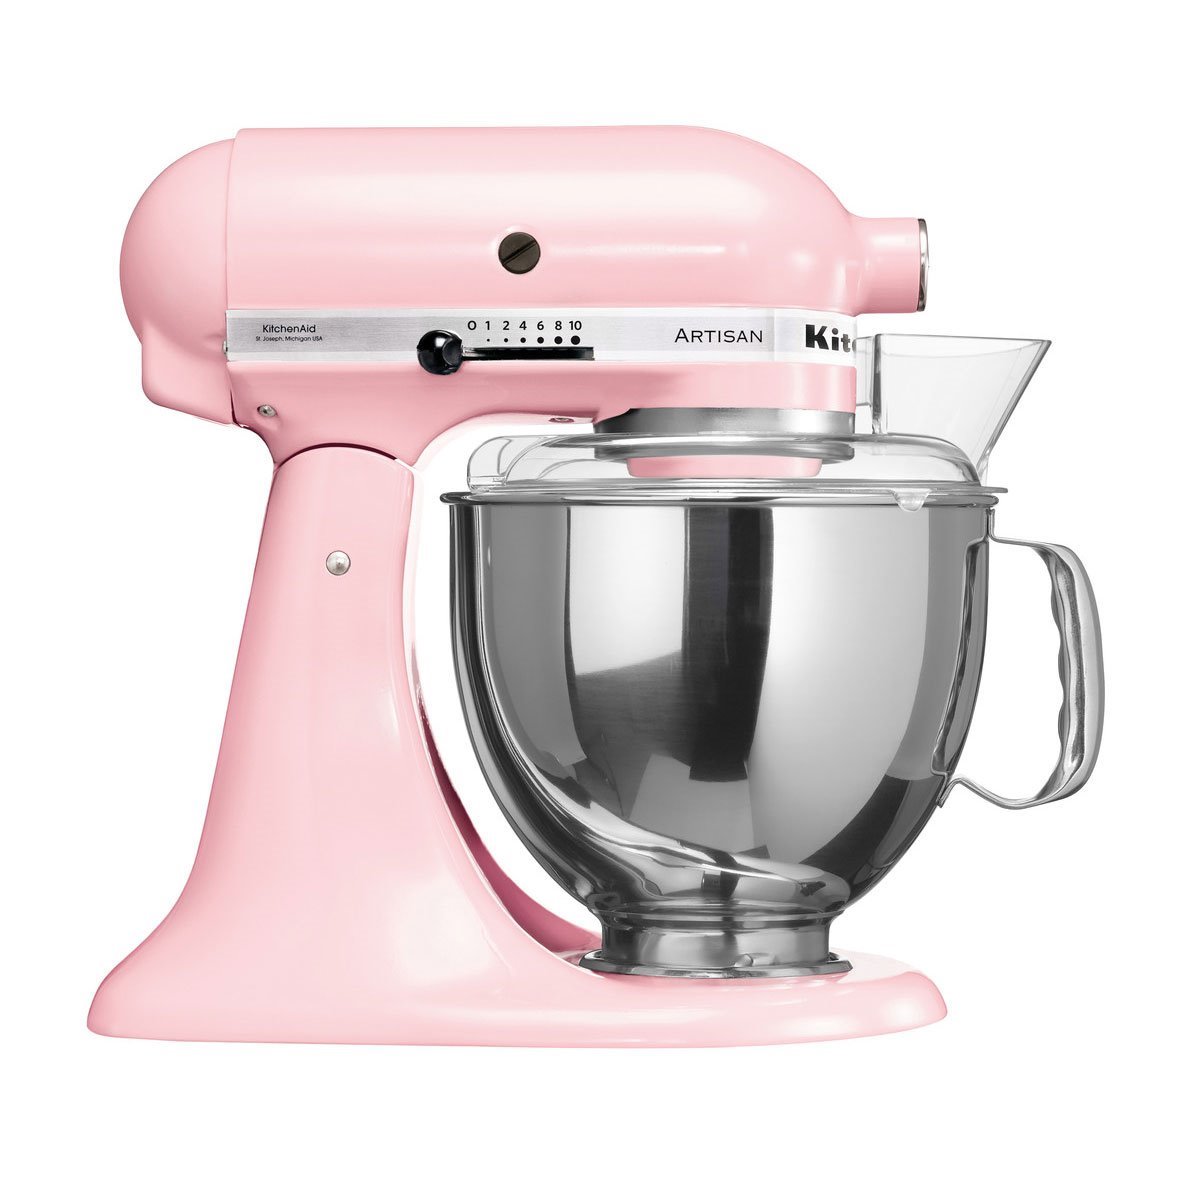 Artisan Mixer, 4.8L, Model 175, Seiden Pink color - KitchenAid brand